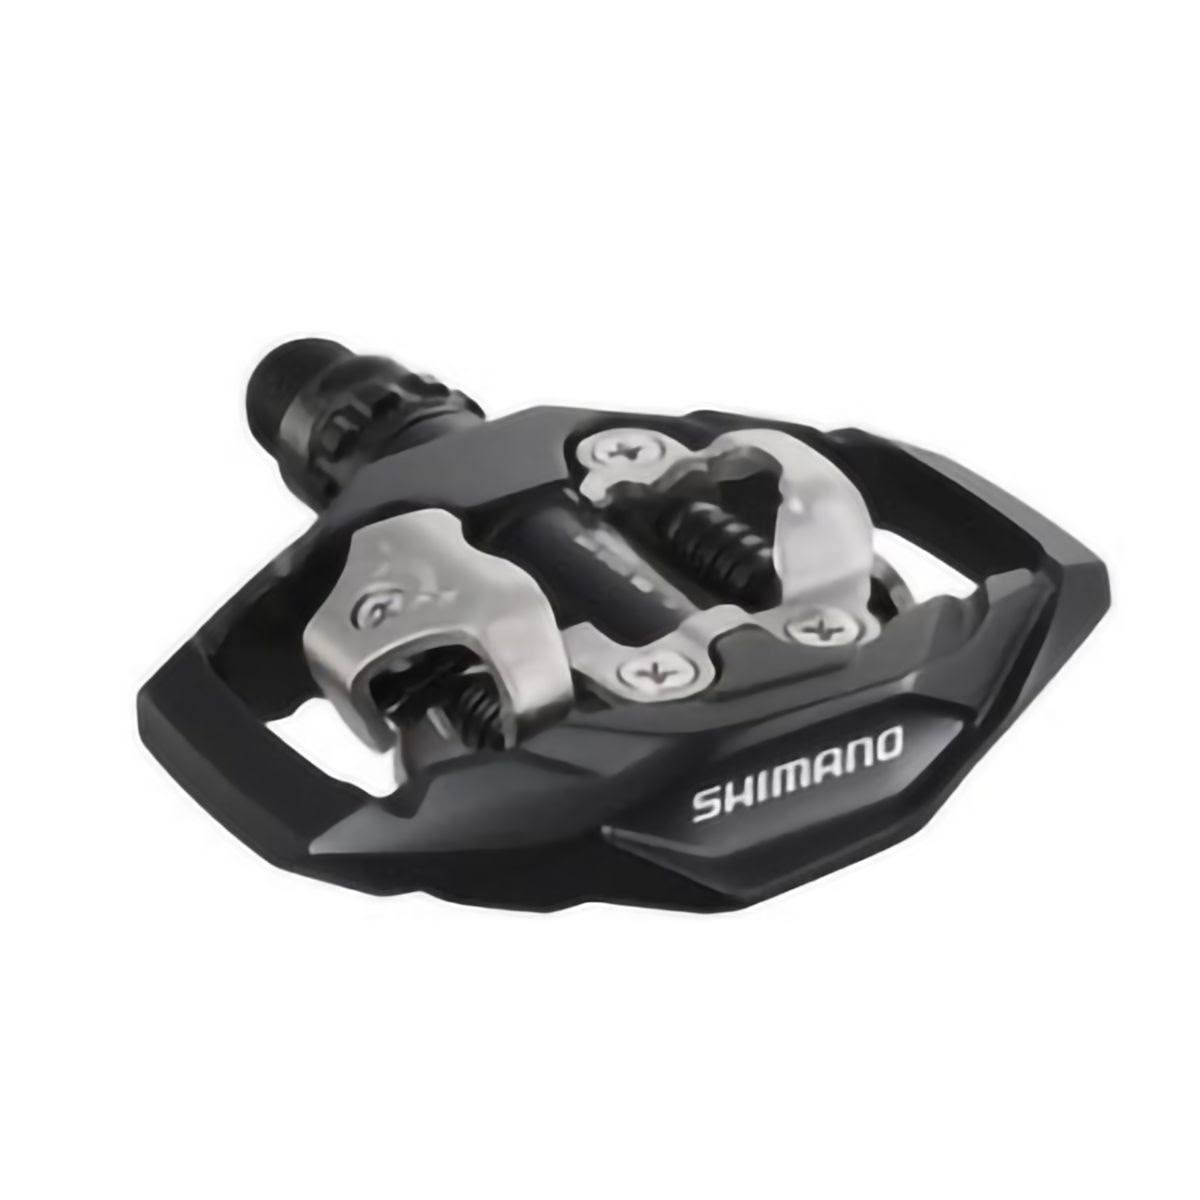 Shimano M530 SPD Pedals - Black